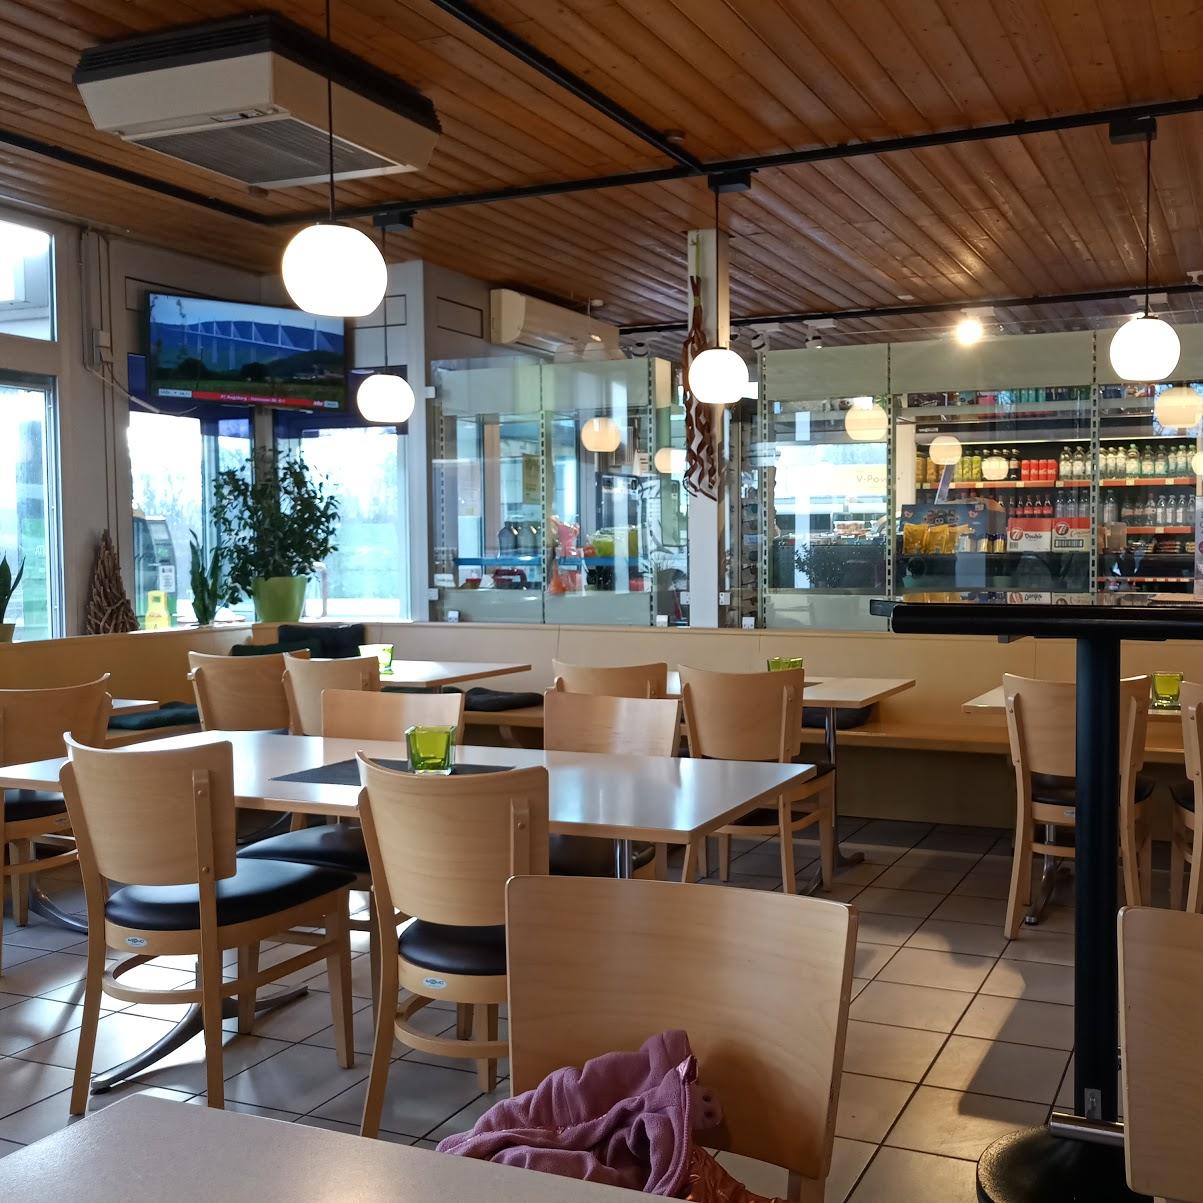 Restaurant "Coffee Fellows - Kaffee, Bagels, Frühstück" in Grünsfeld